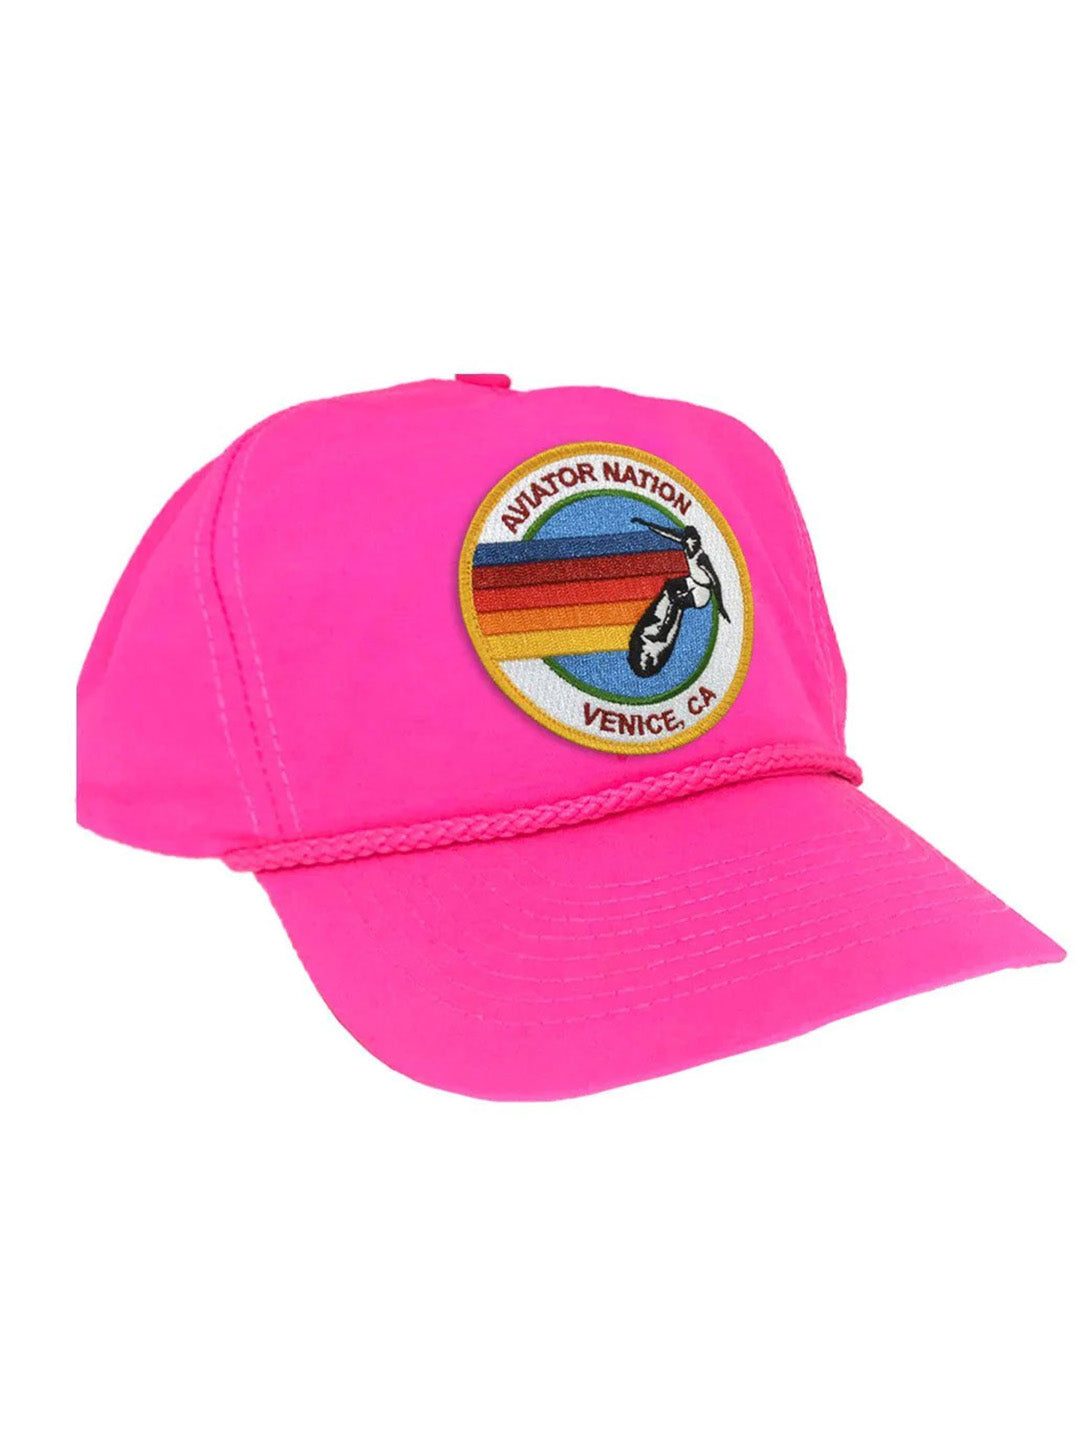 AVIATOR NATION  Signature Vintage Nylon Trucker Hat - Neon Pink